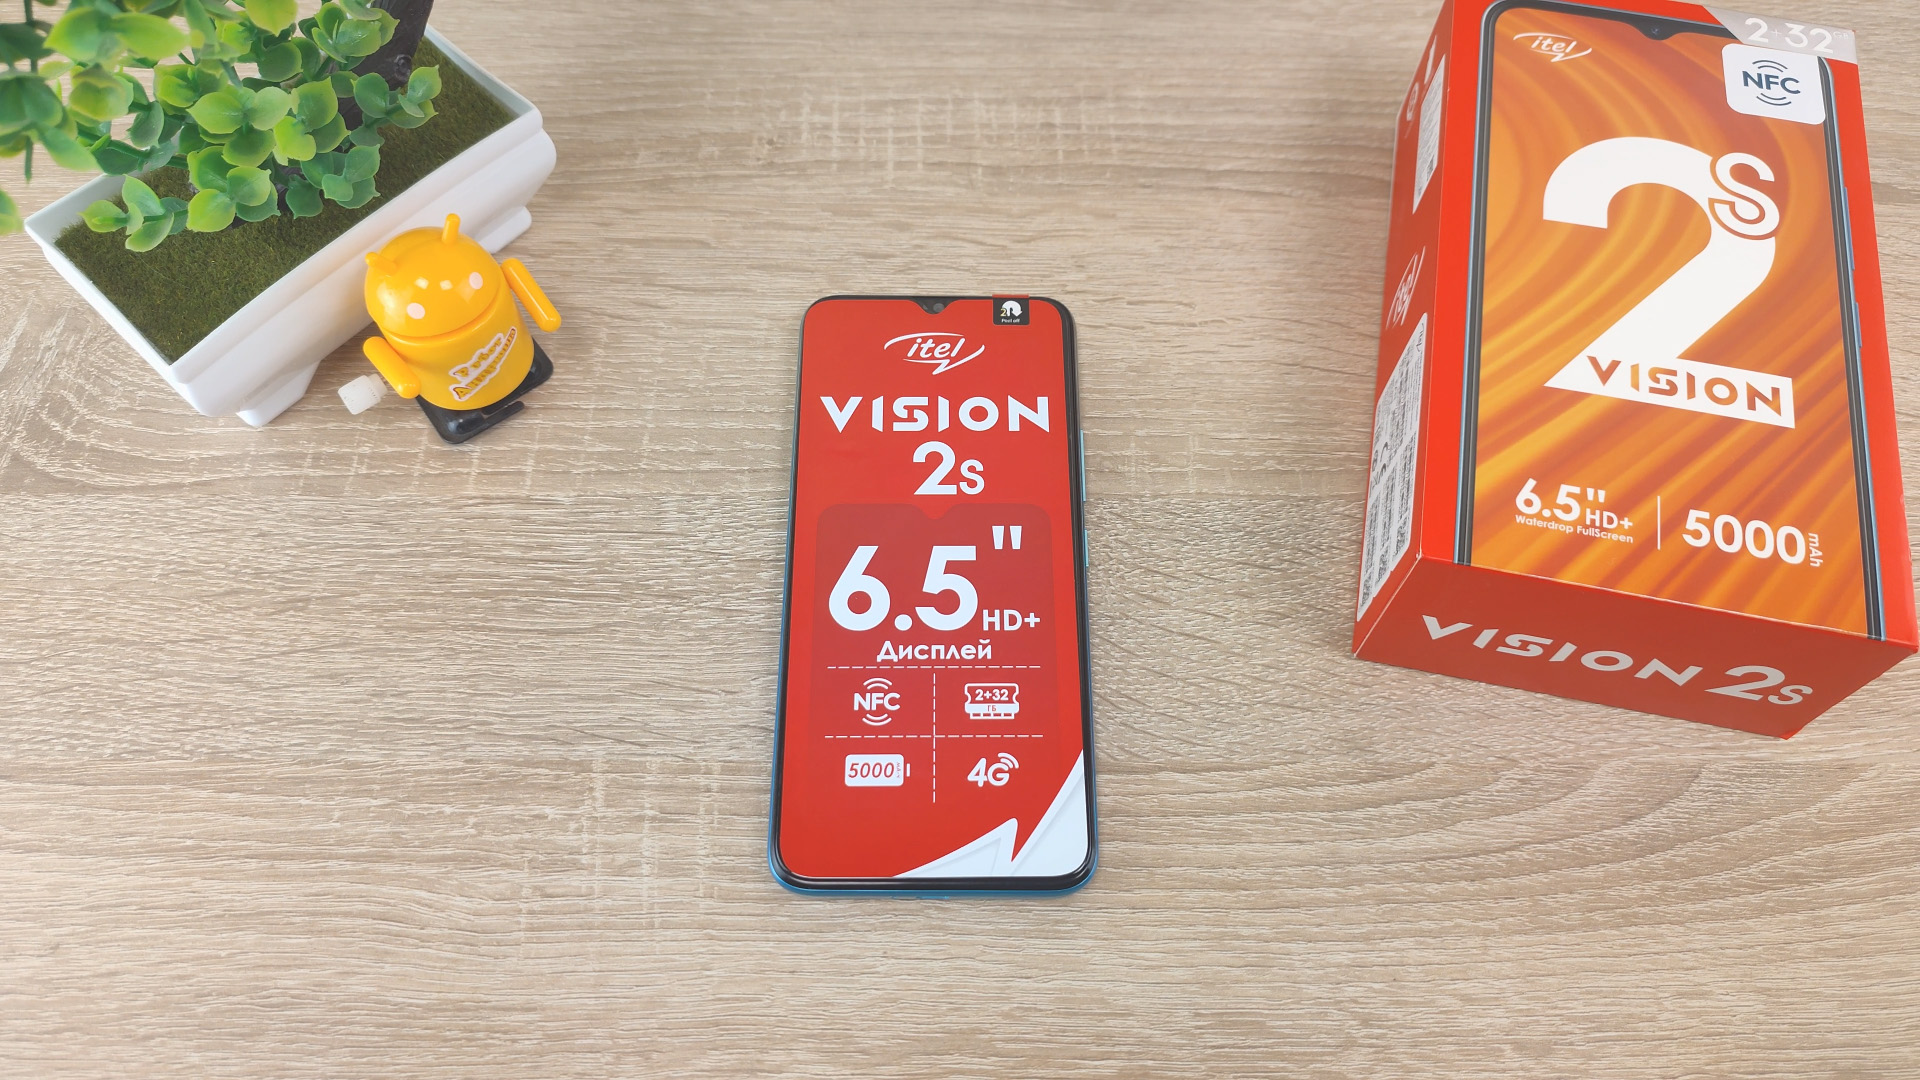 Itel Vision 2S smartphone